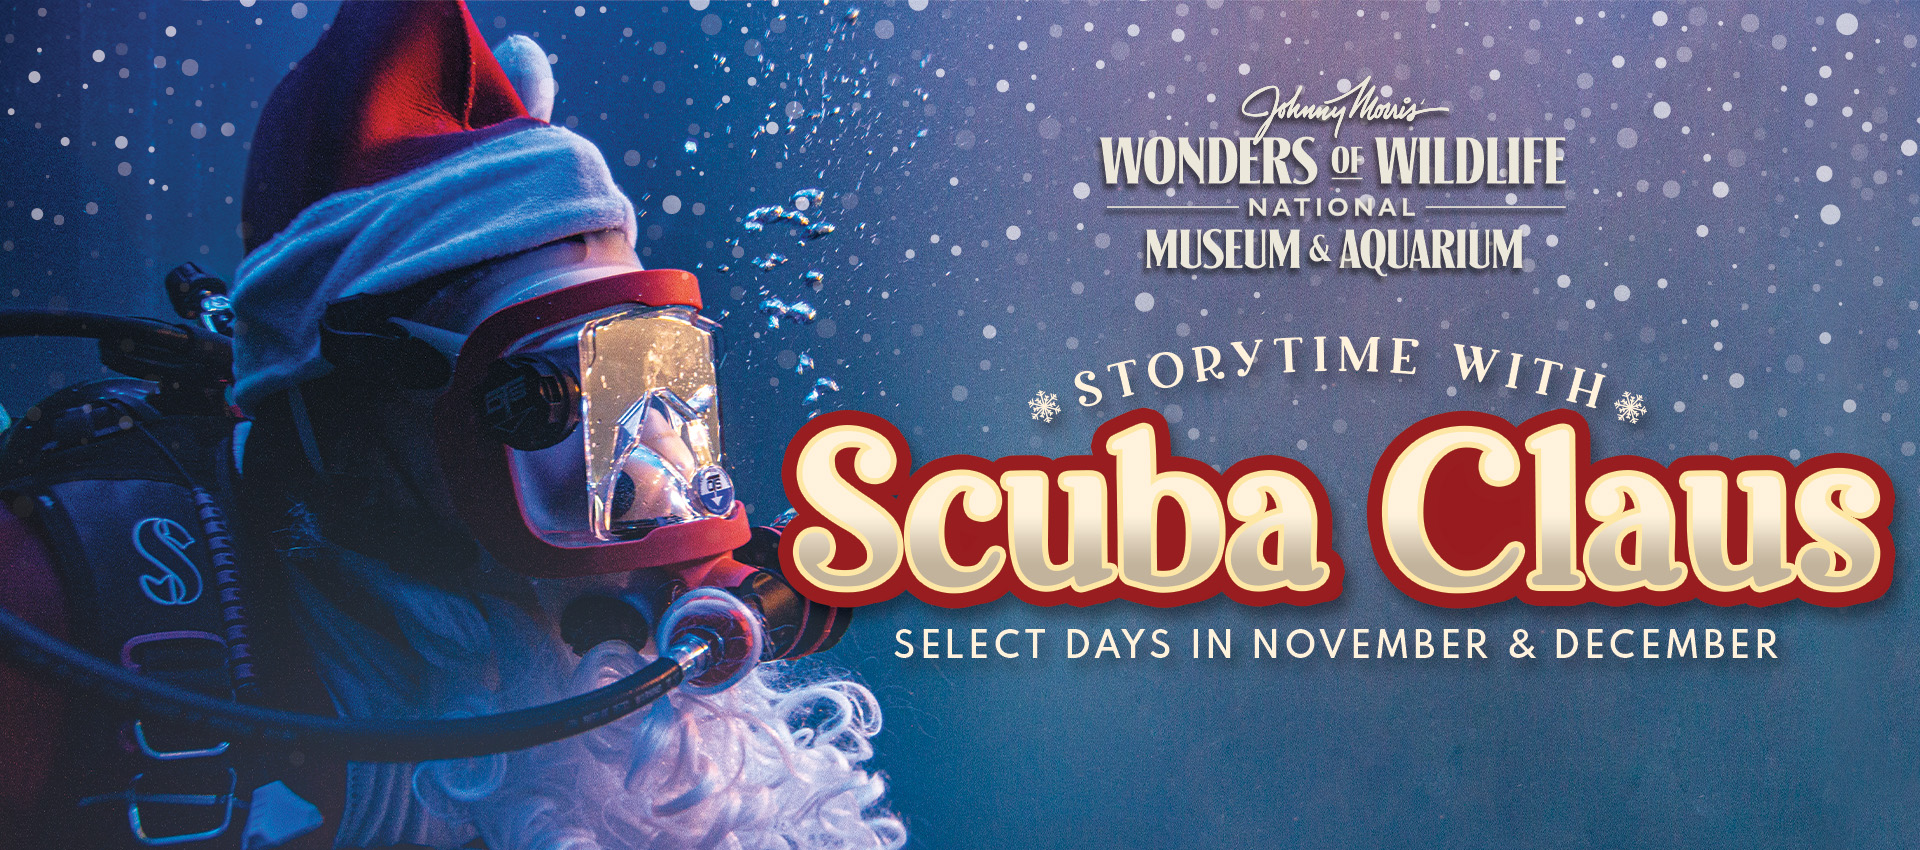 Scuba Claus - Header_HolidaysPage